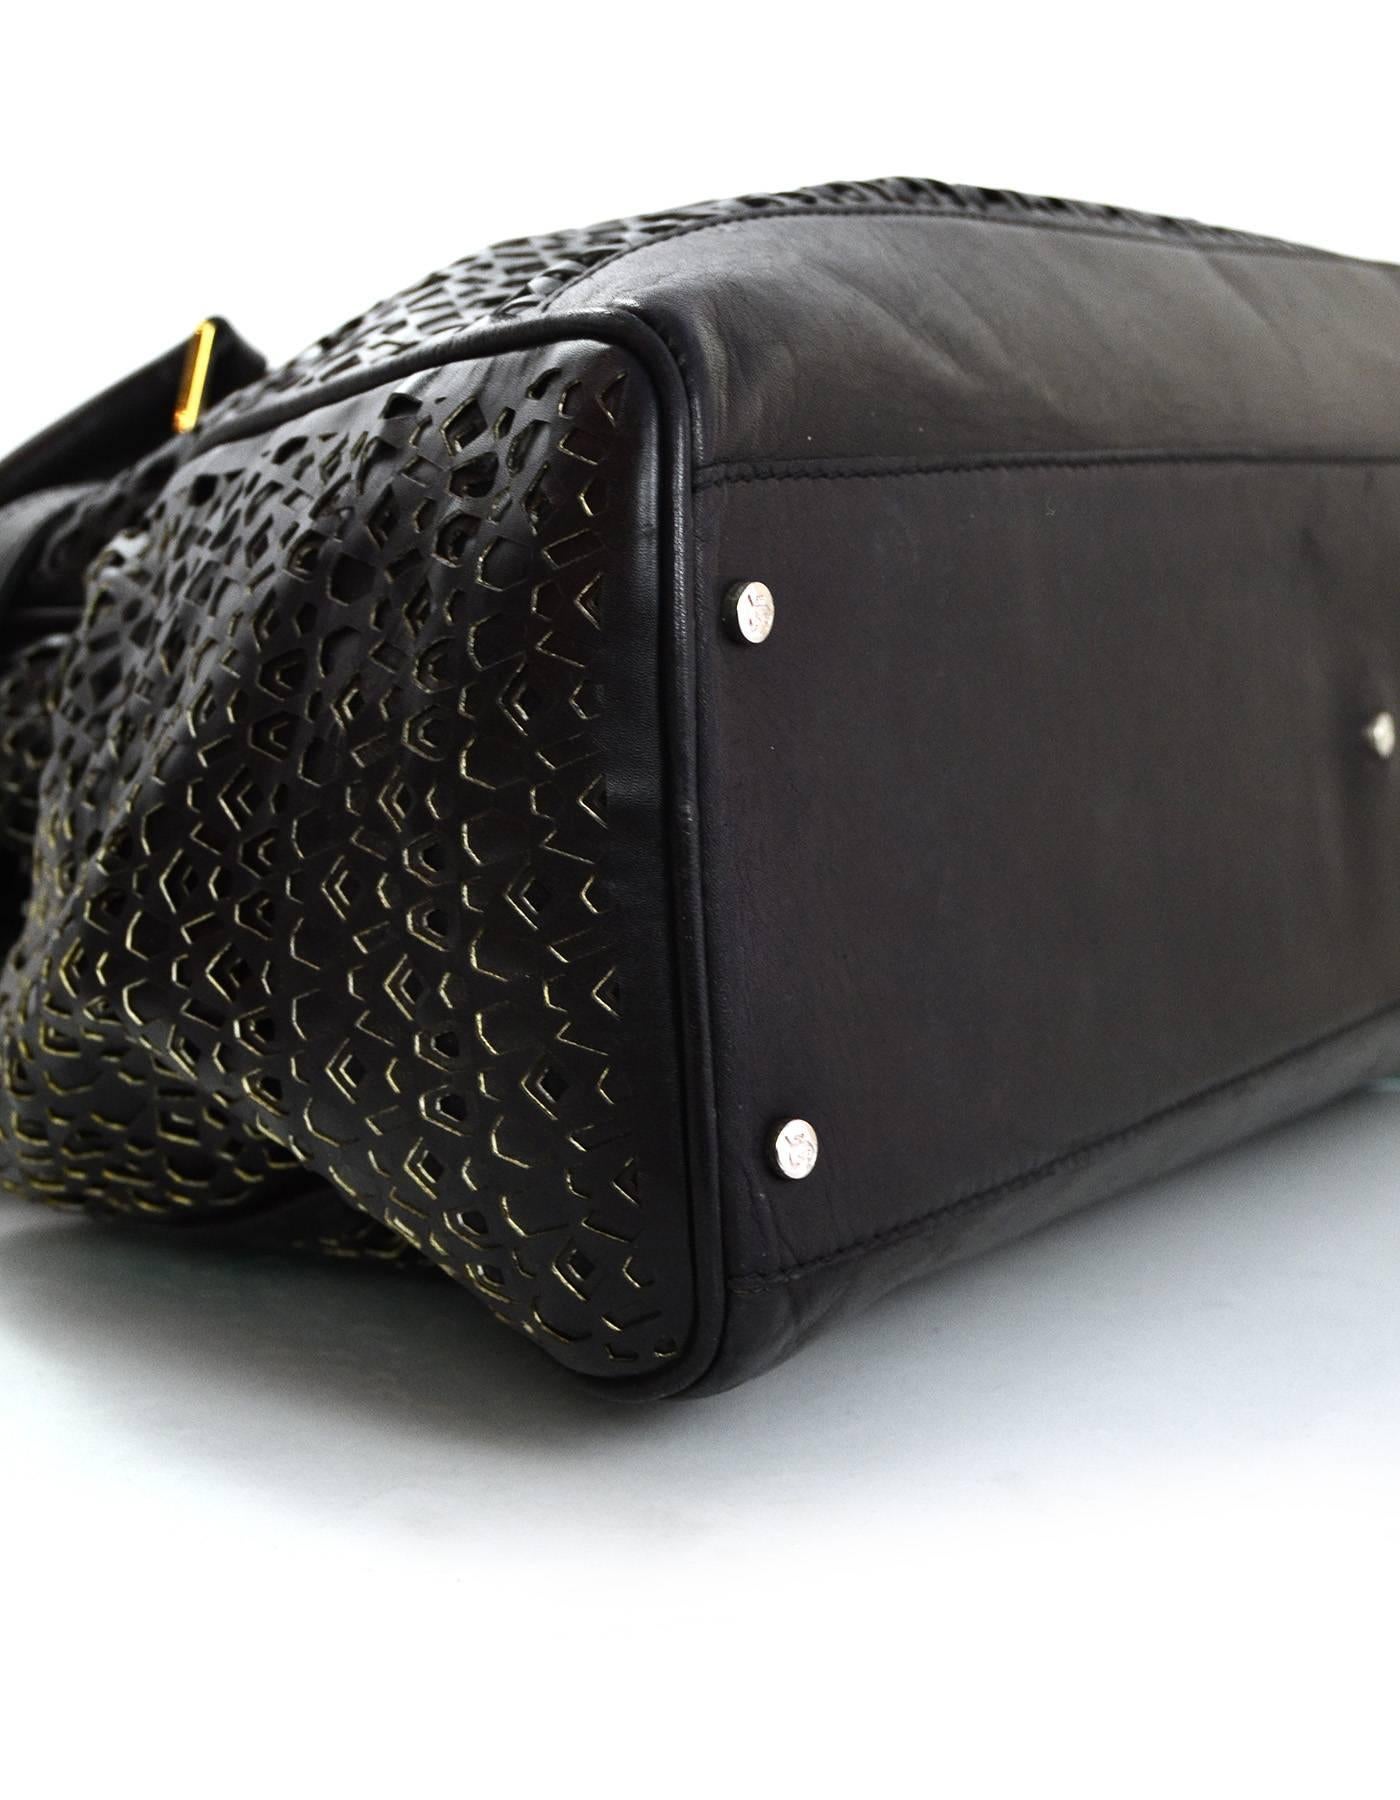 gianfranco ferre black leather handbag